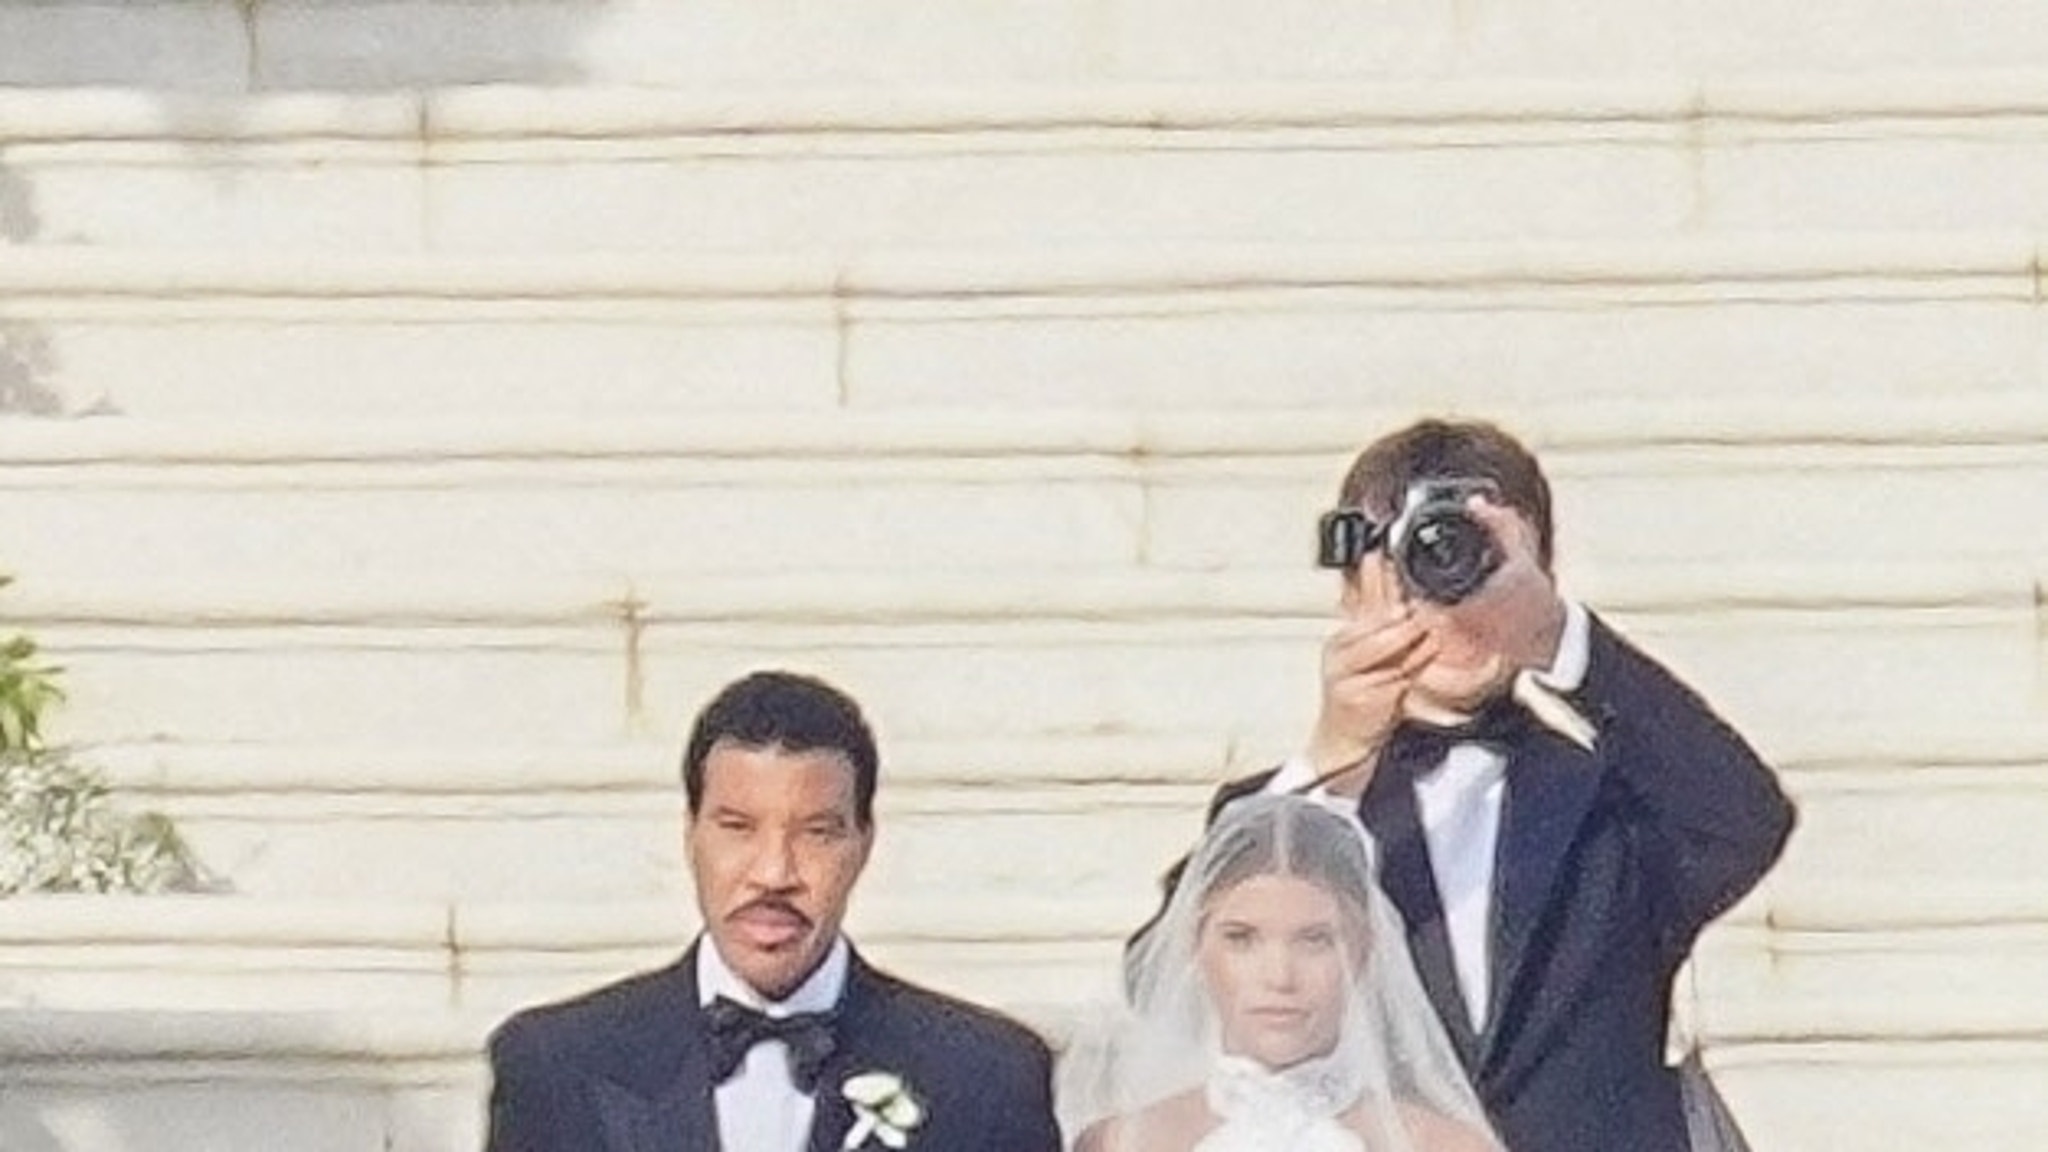 Sofia Richie and Elliot Grainge Wedding